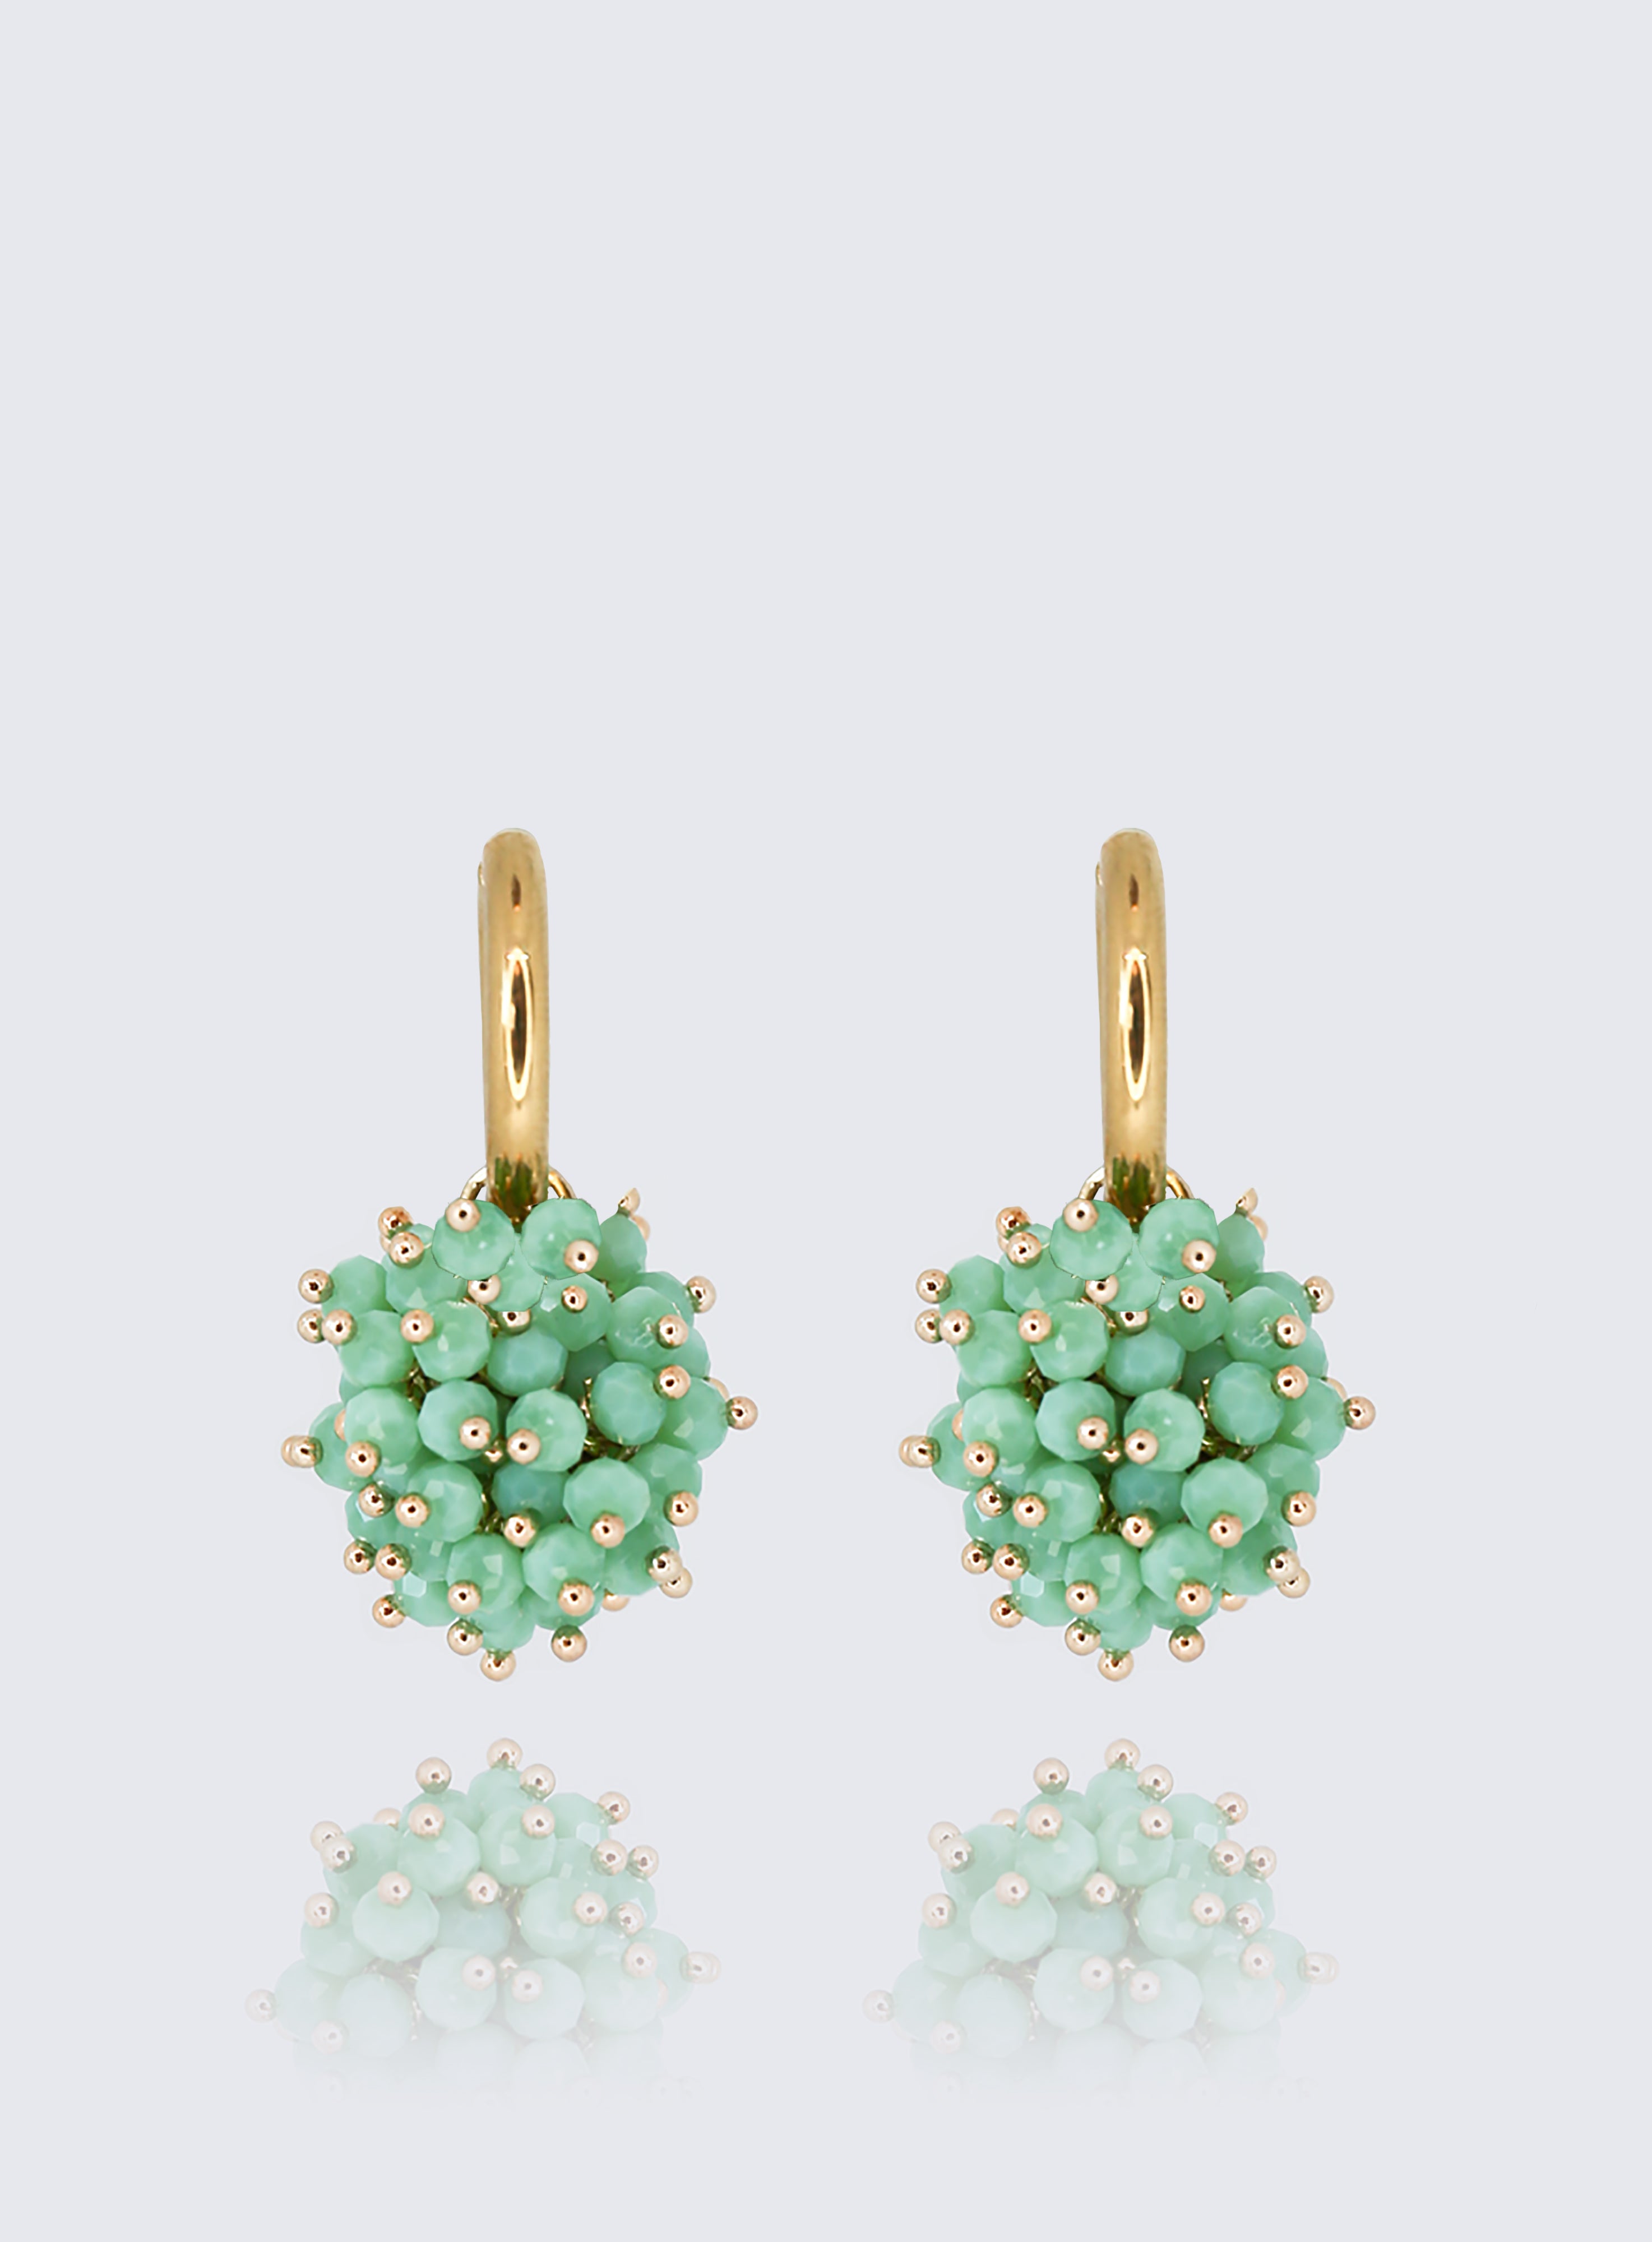 Lily earrings - crystal